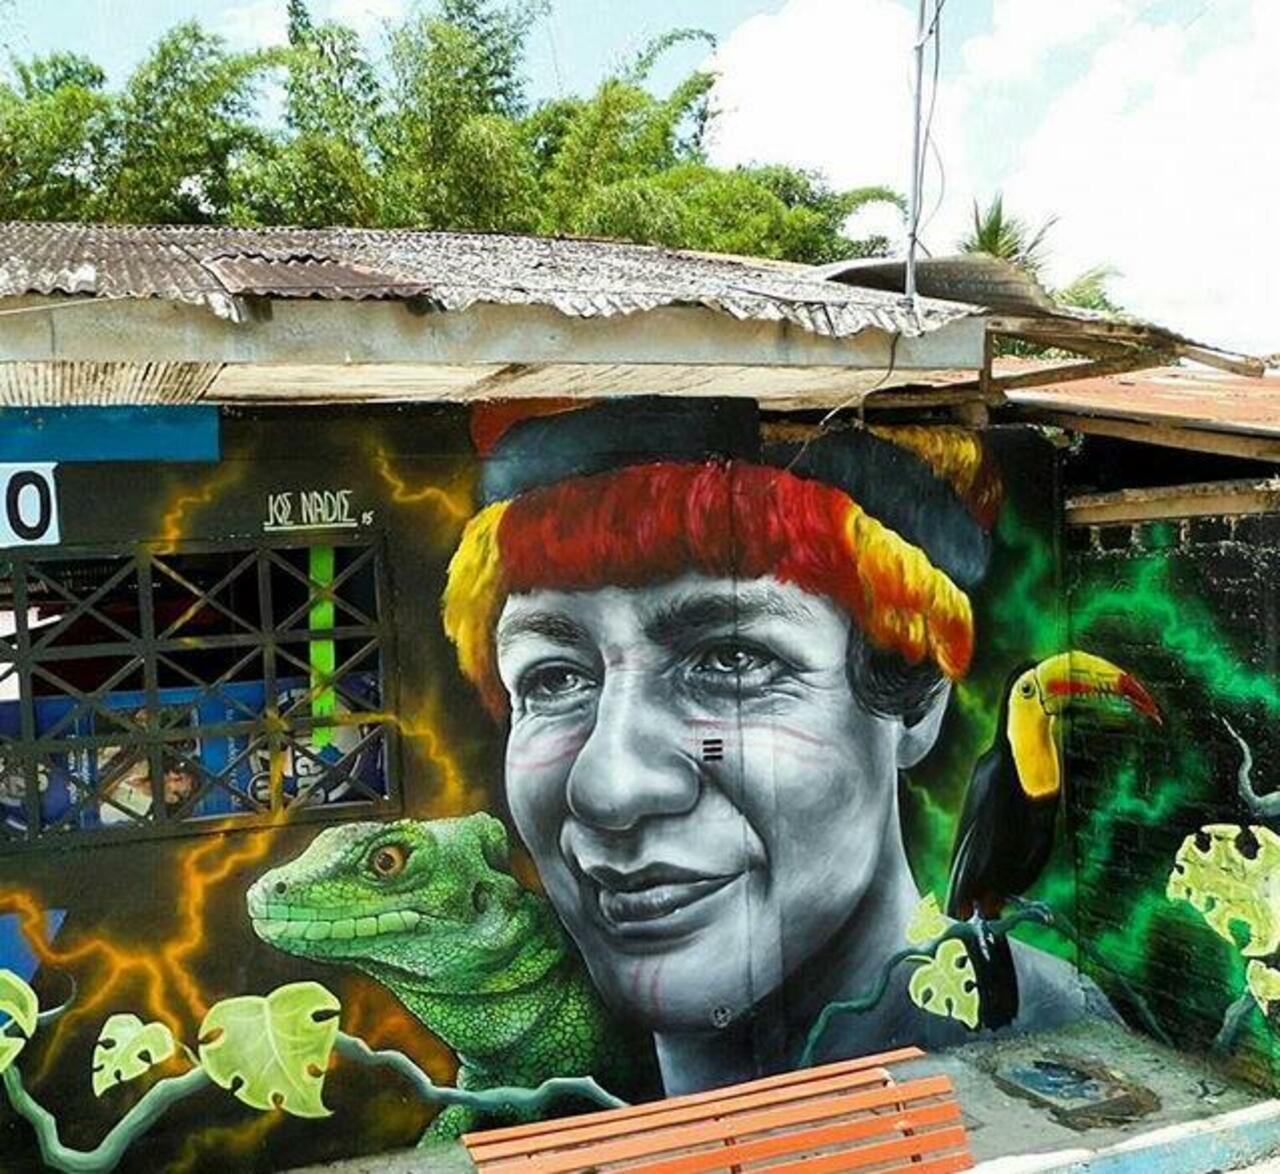 Cool! Street Art by Joe Nadie

#art #mural #graffiti #streetart http://t.co/R81GC2nms6 MT @GoogleStreetArt